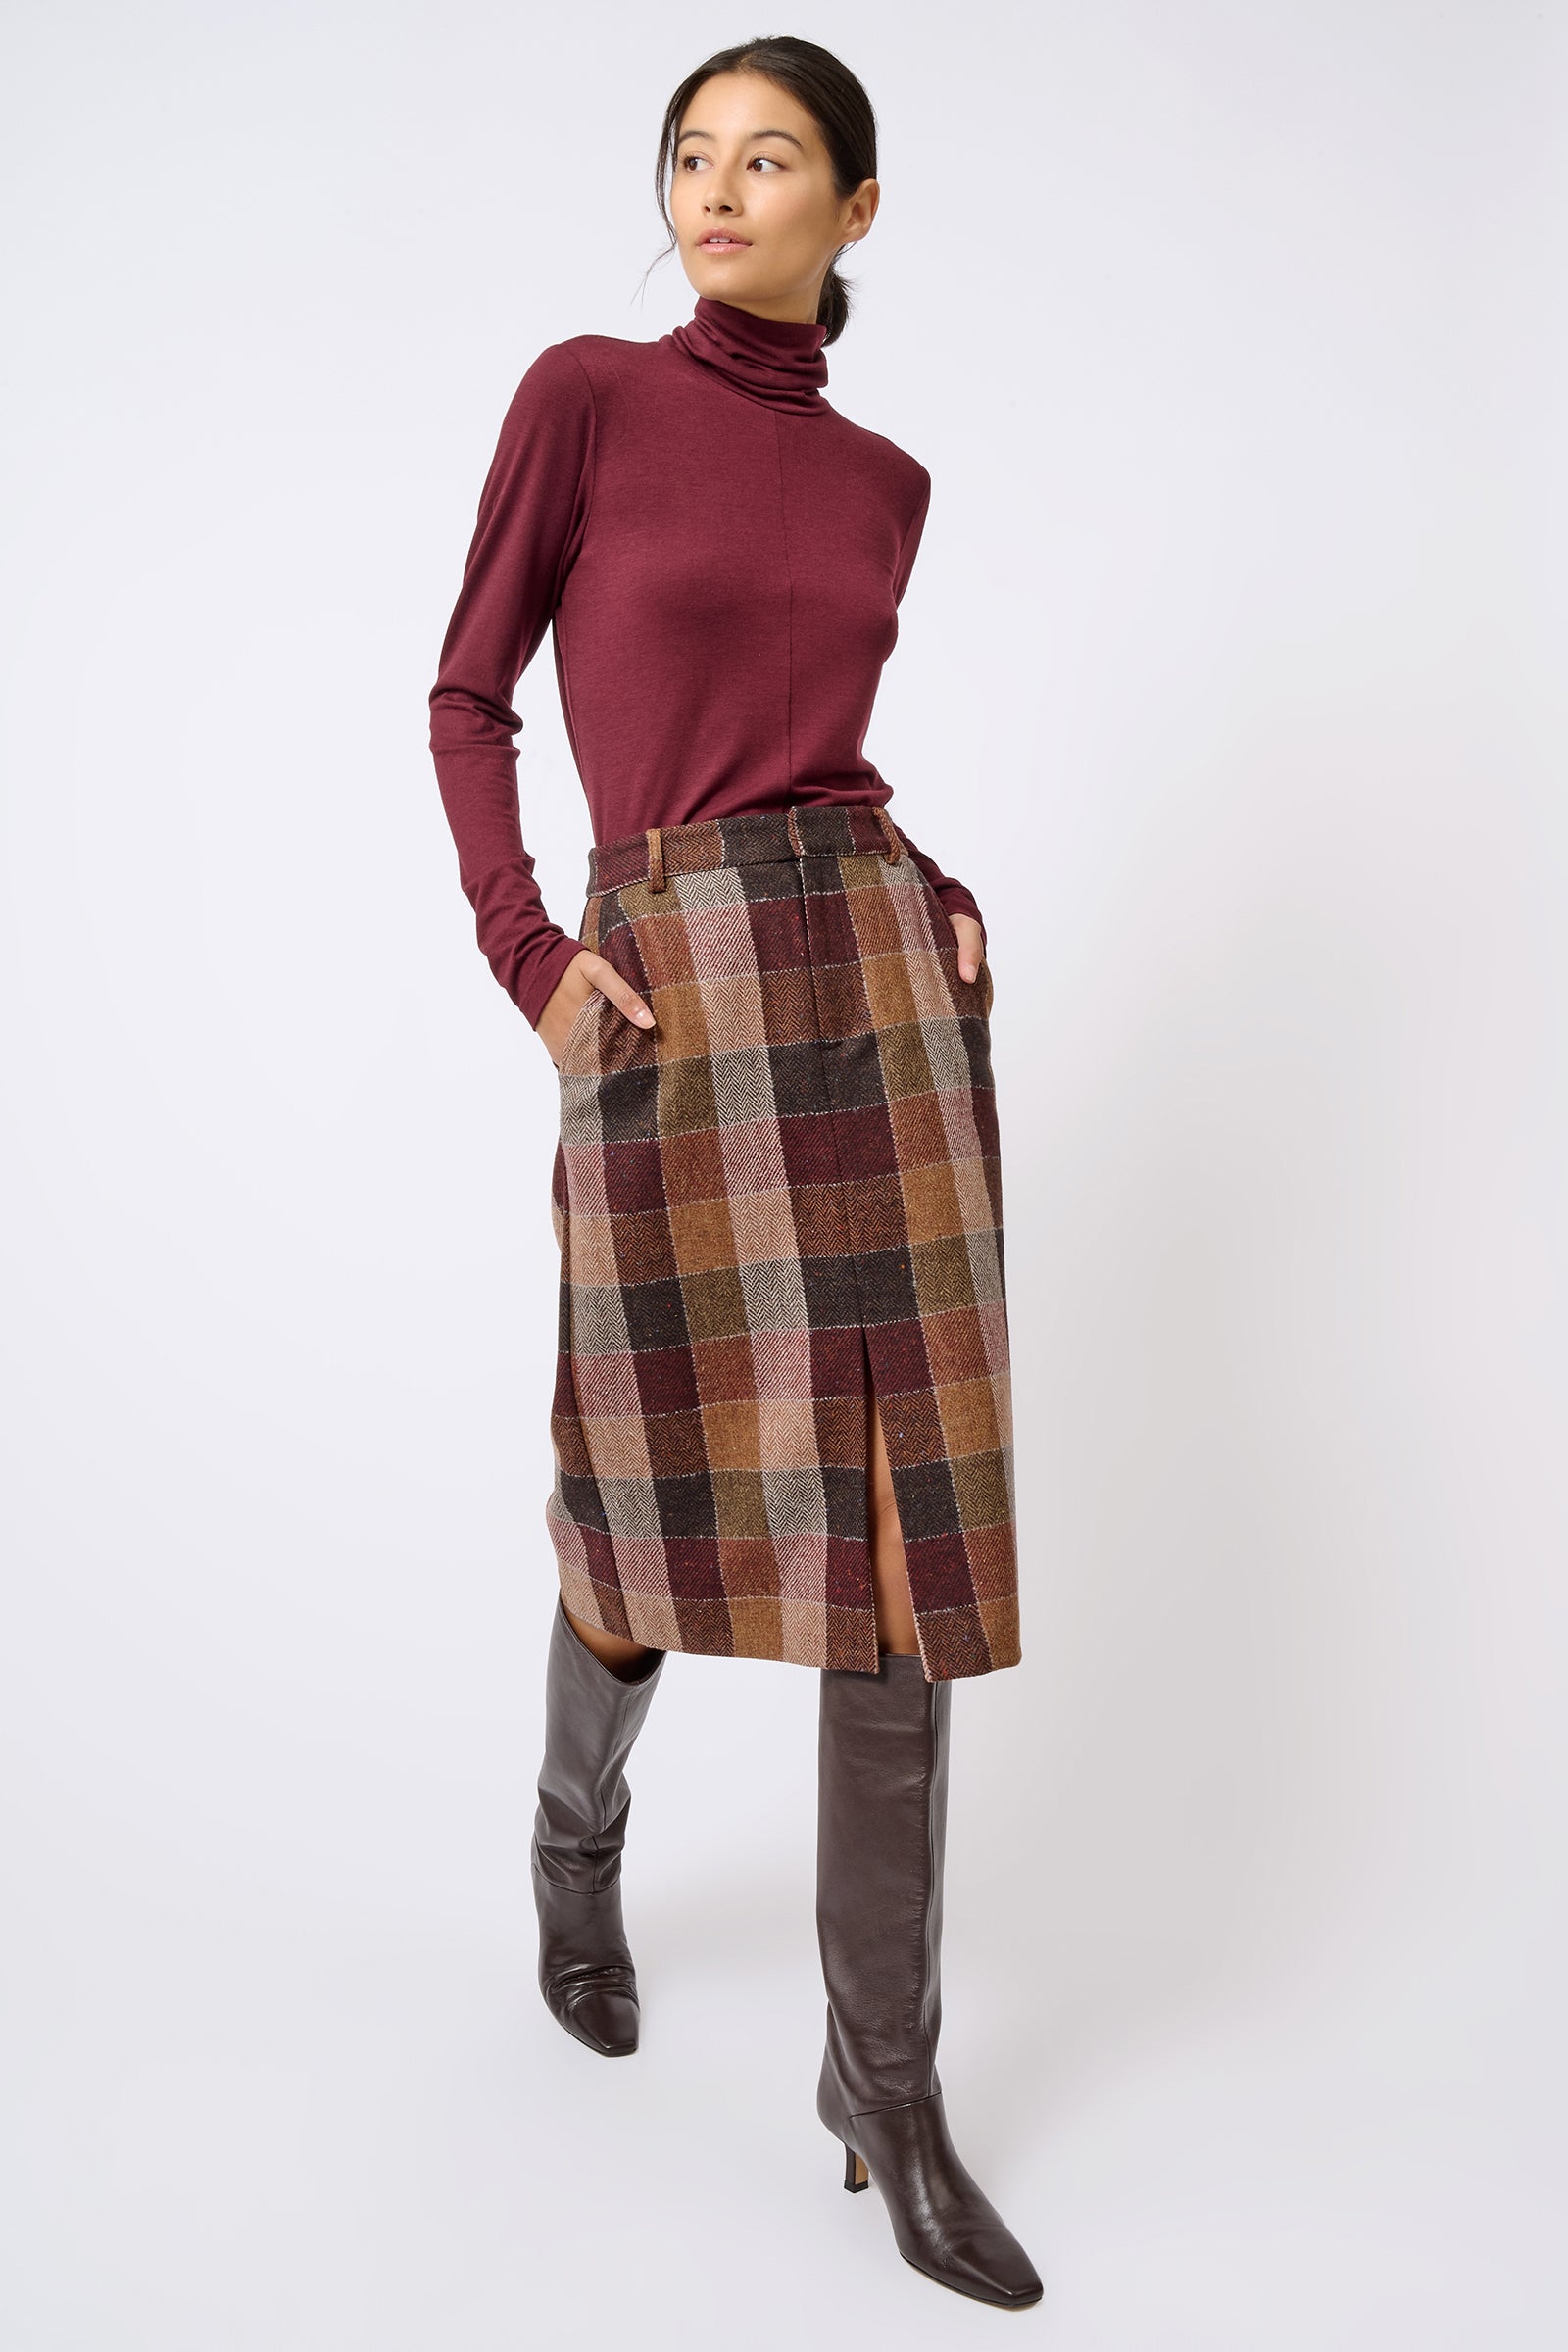 Kal Rieman Caroline Trouser Skirt in Patchwork Fabric on Model Walking Full Front View